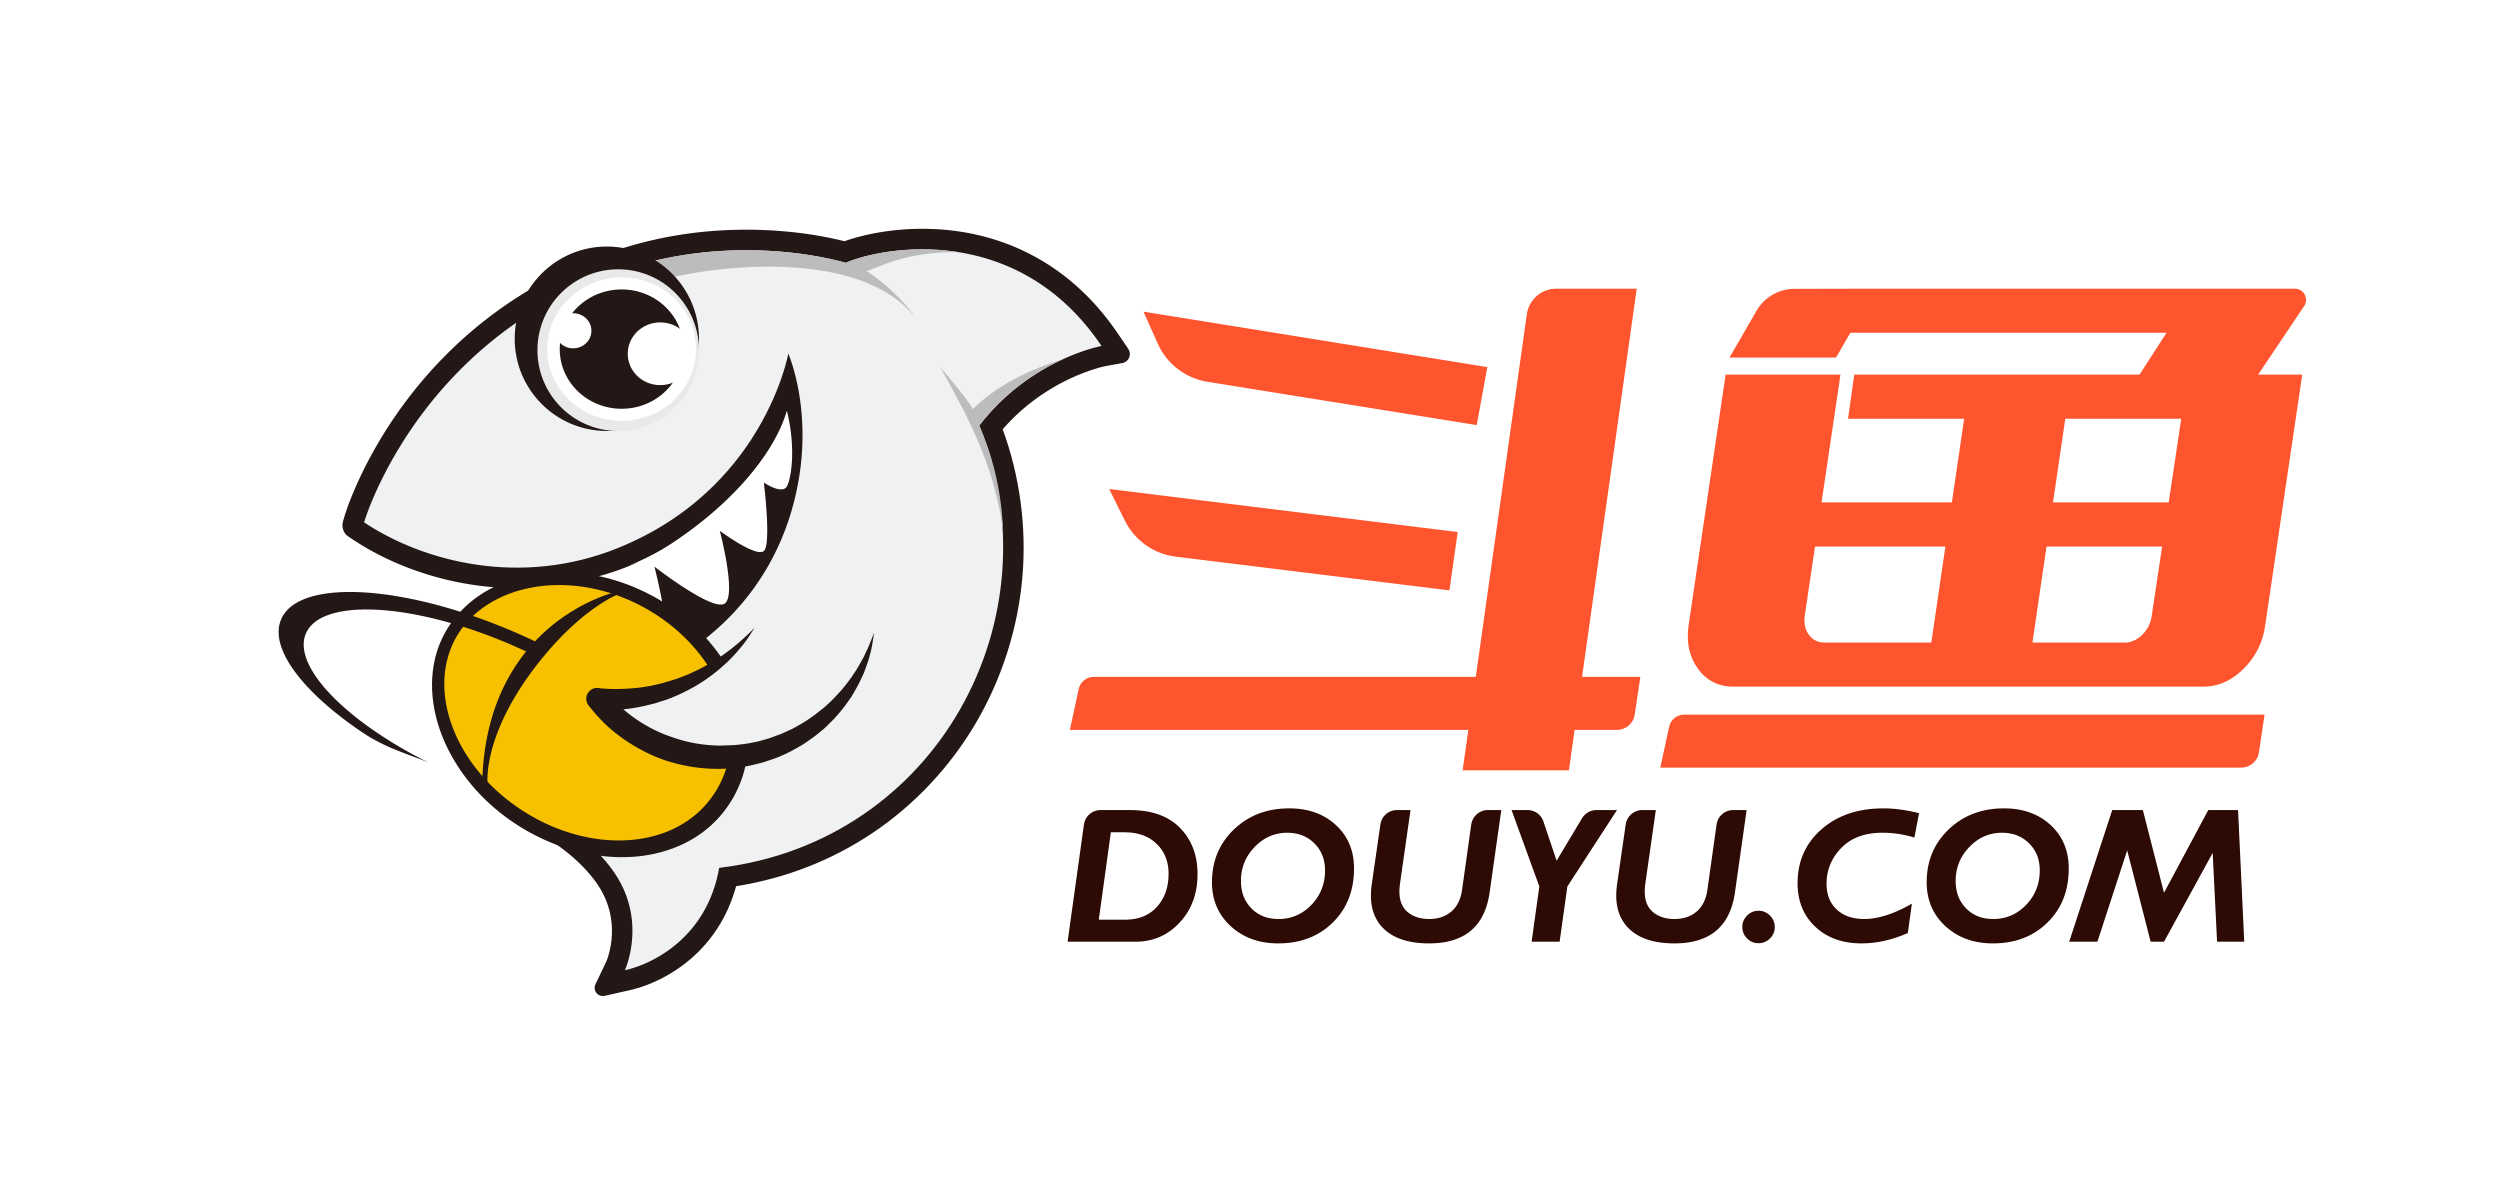 douyu's logo